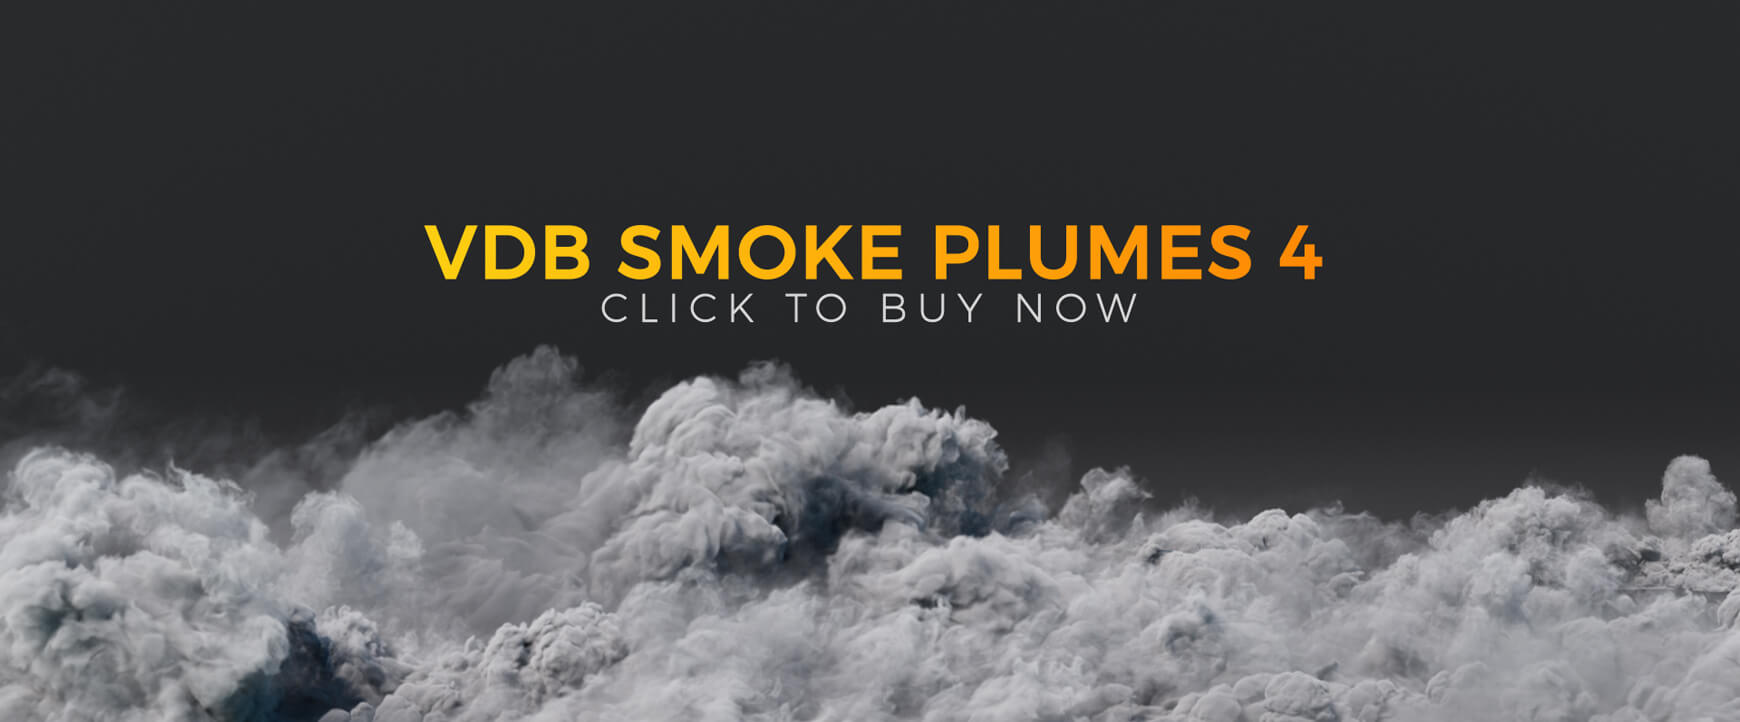 VFX Elements VDB Smoke Plumes 4 Buy Now